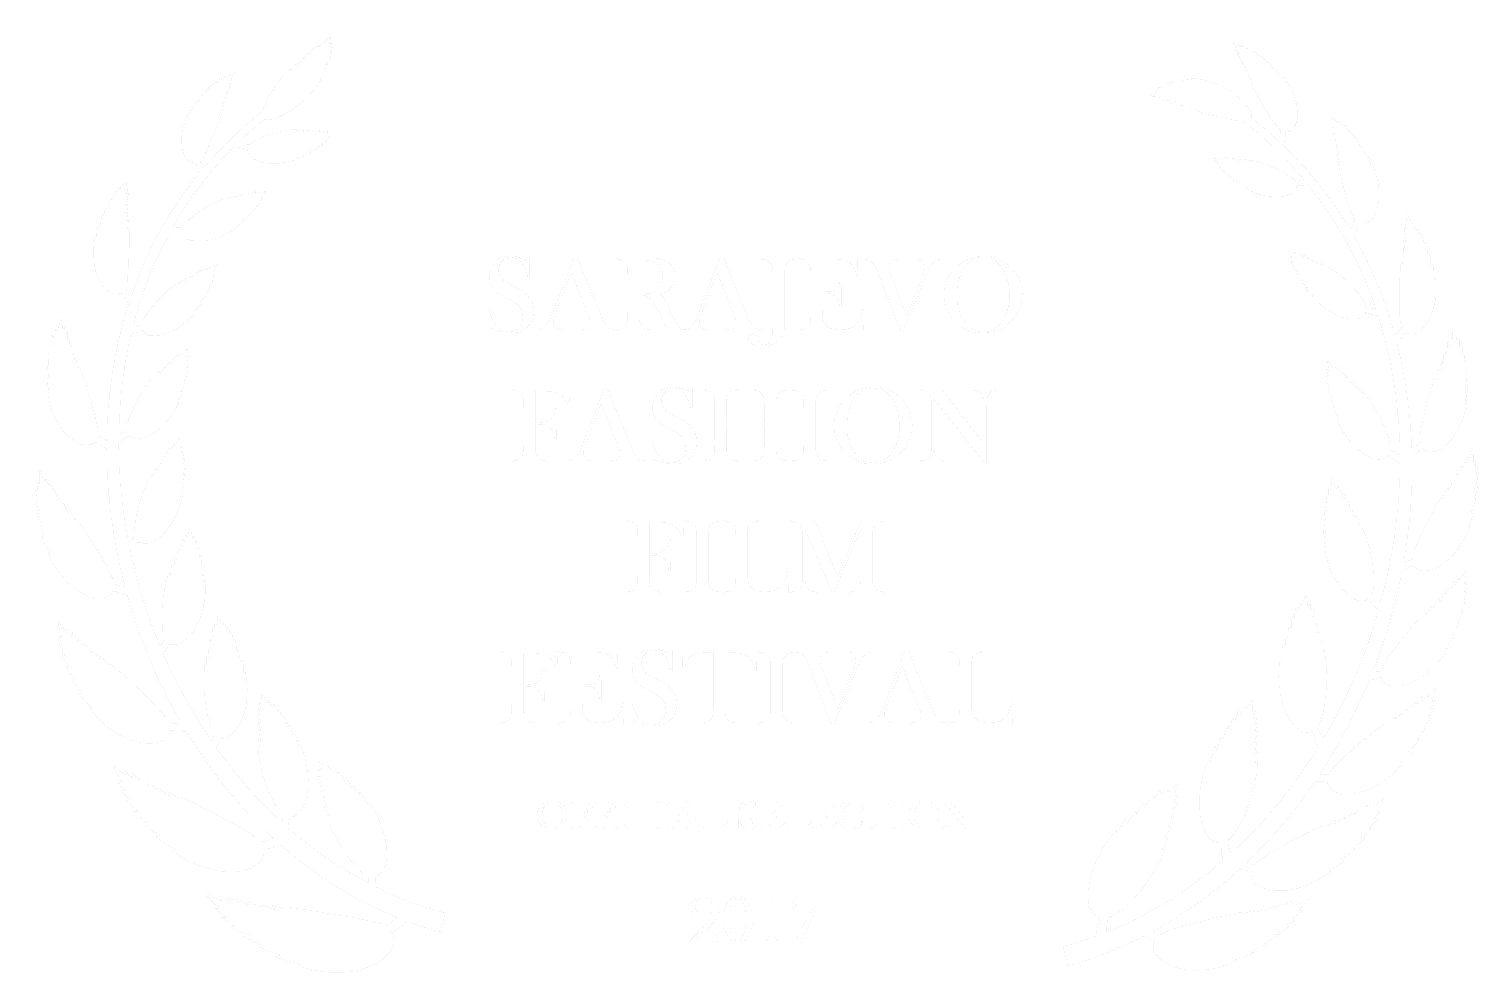 Sarajevo fashion film festival